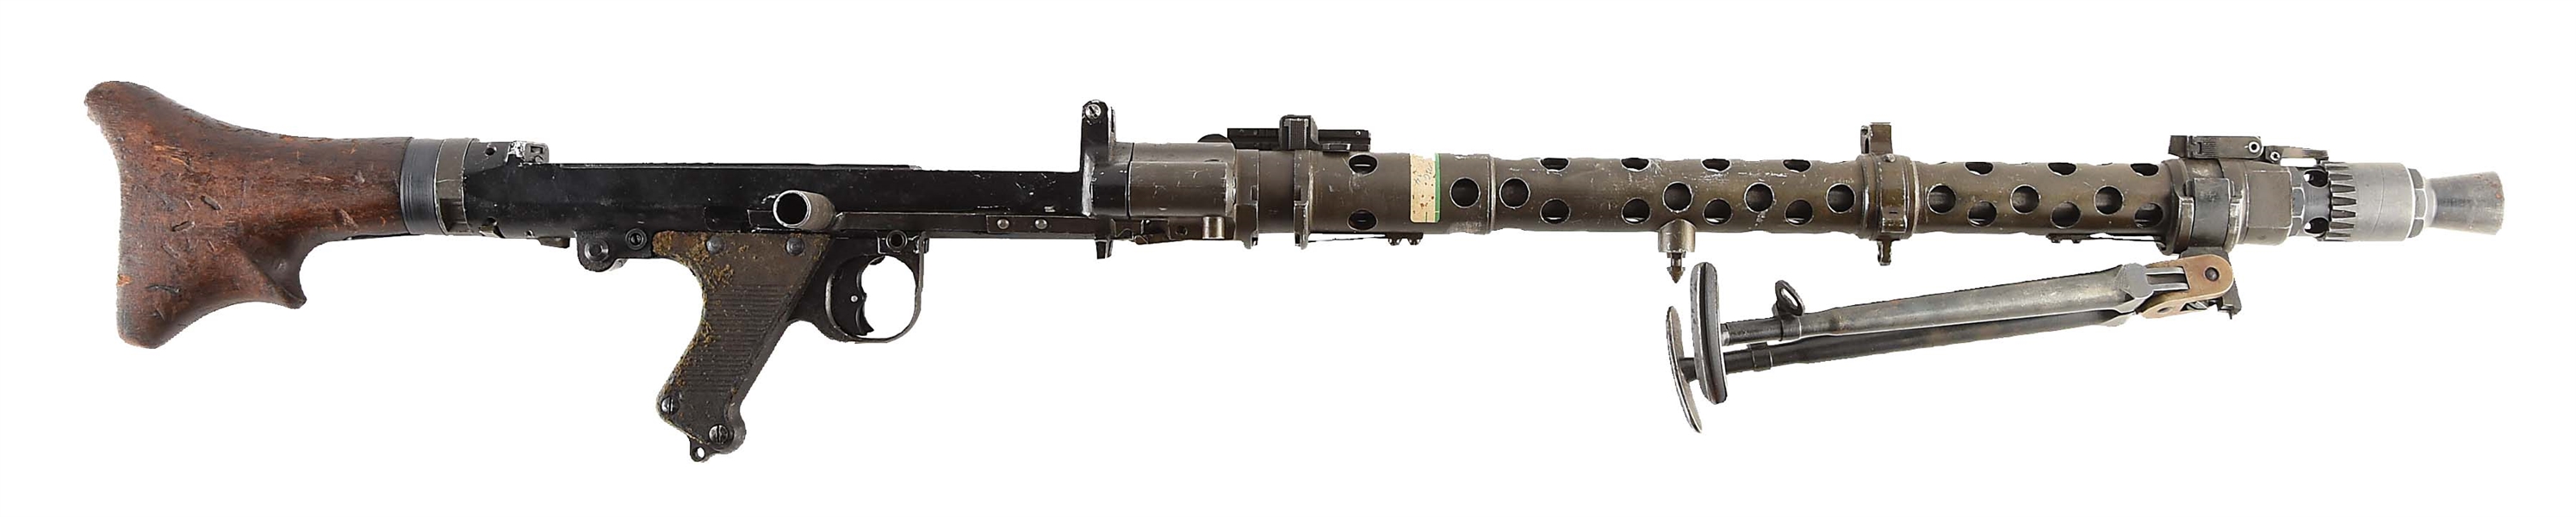 MG34 MACHINE GUN PARTS KIT ON DUMMY RECEIVER FOR DISPLAY